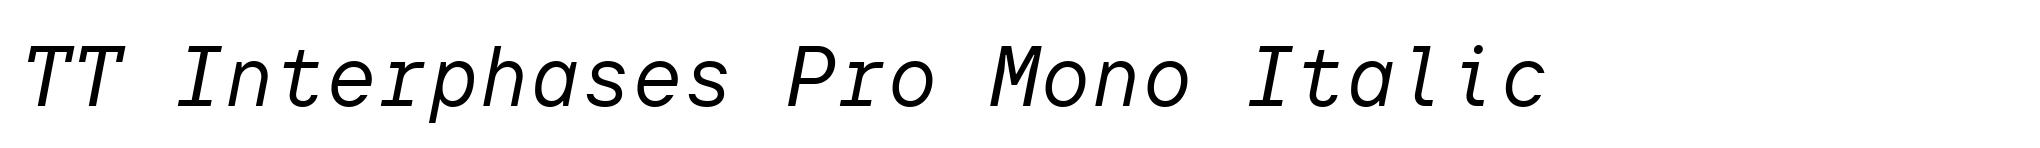 TT Interphases Pro Mono Italic image